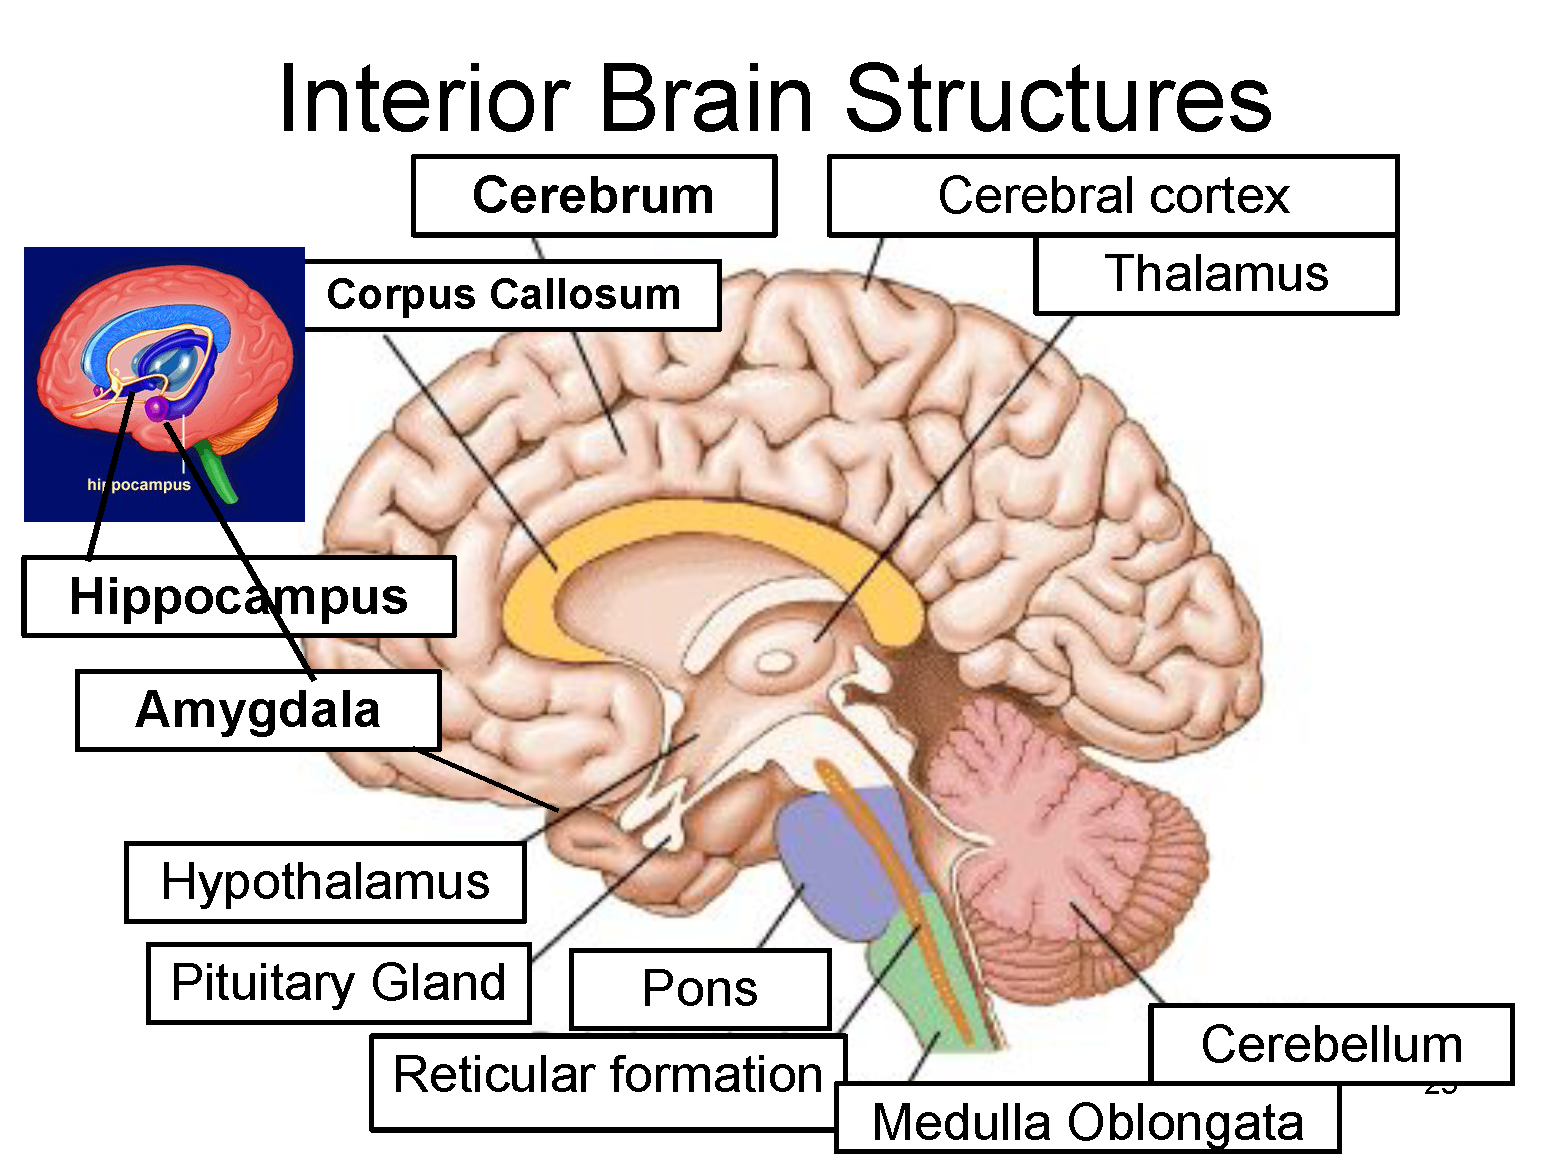 <ul><li><p>part of the limbic system</p></li><li><p>processes conscious, explicit memories</p></li><li><p>as we age, size decreases and function declines</p></li><li><p>can appear smaller after repeated concussions</p></li></ul>